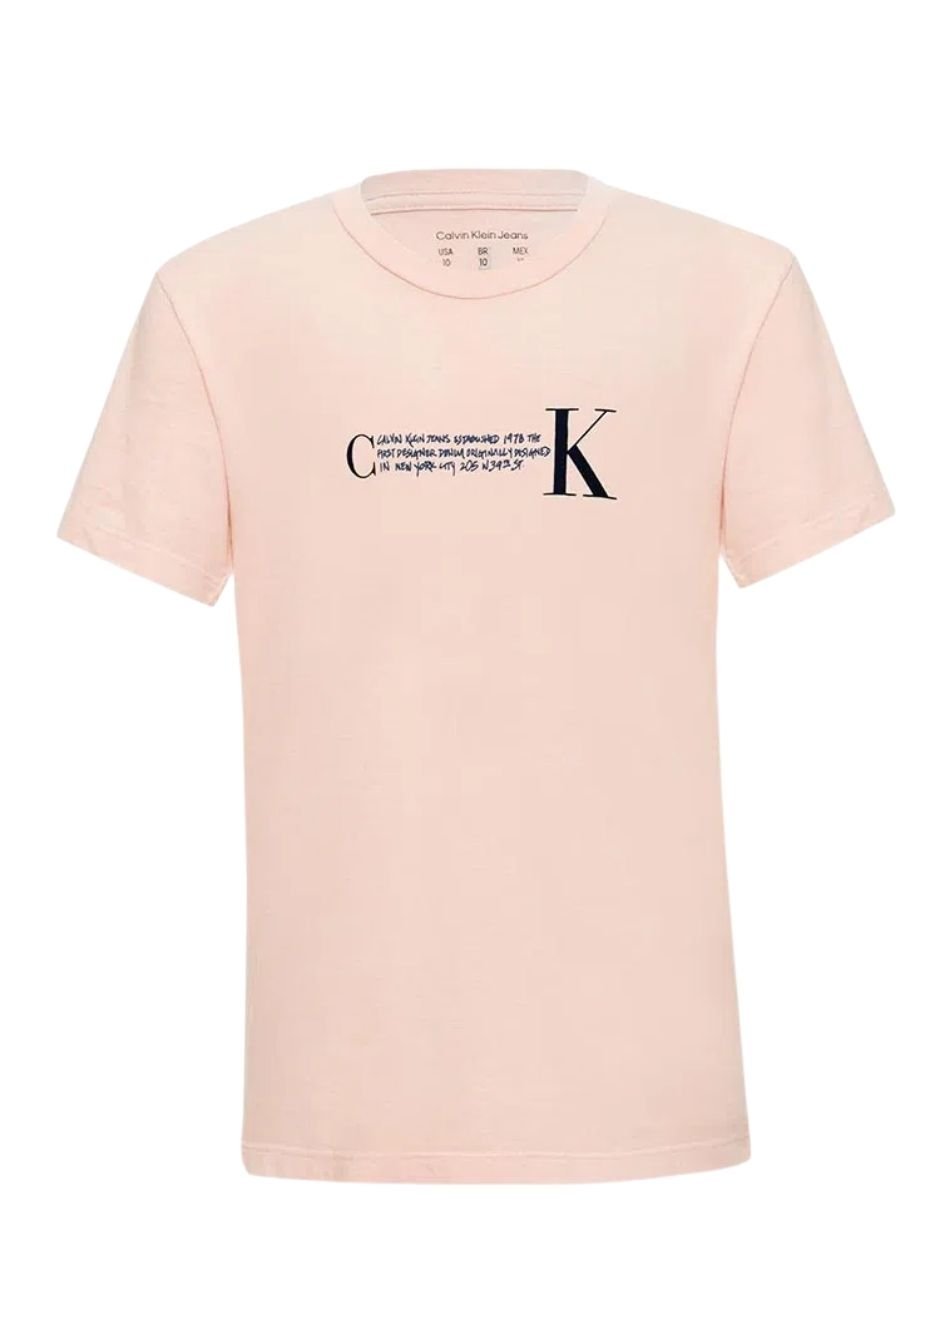 Camiseta Calvin Klein Jeans Infantil C texto K Rosa